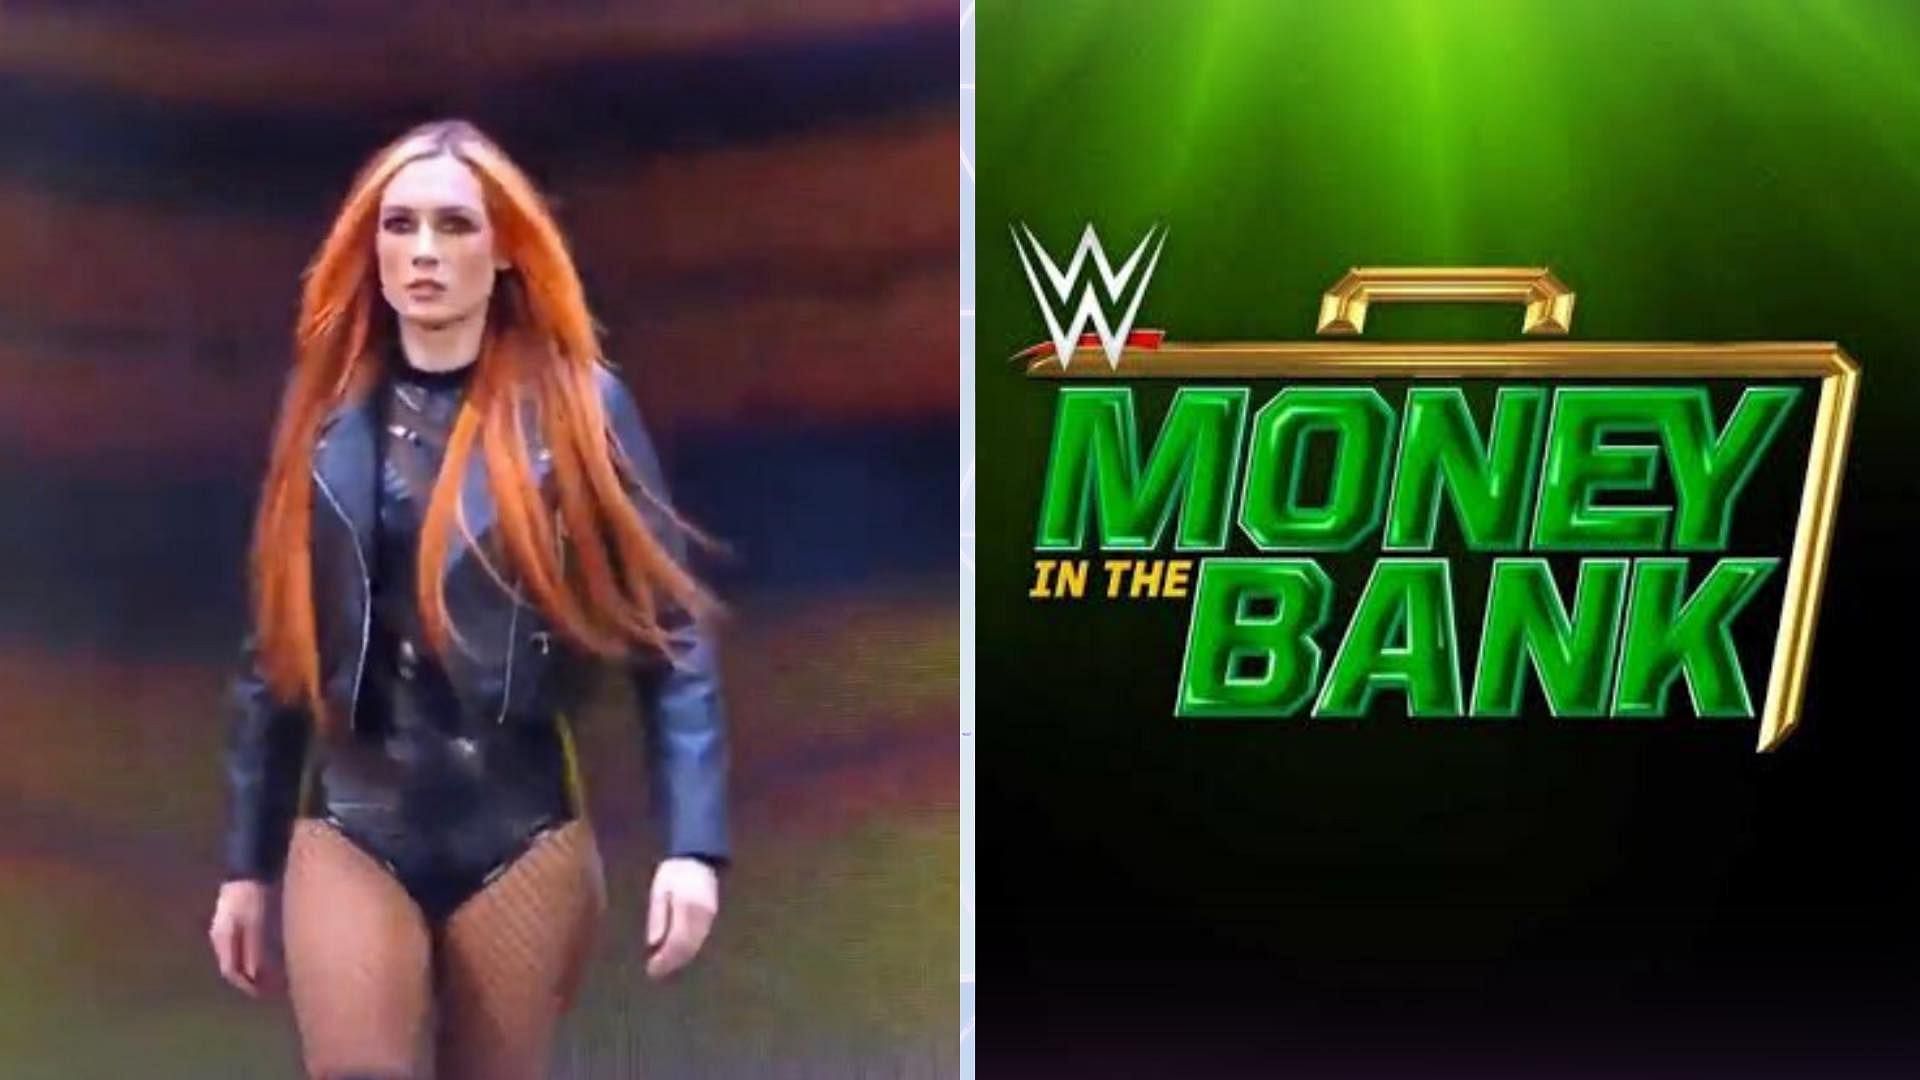 Becky Lynch has earned her way into the WWE Women